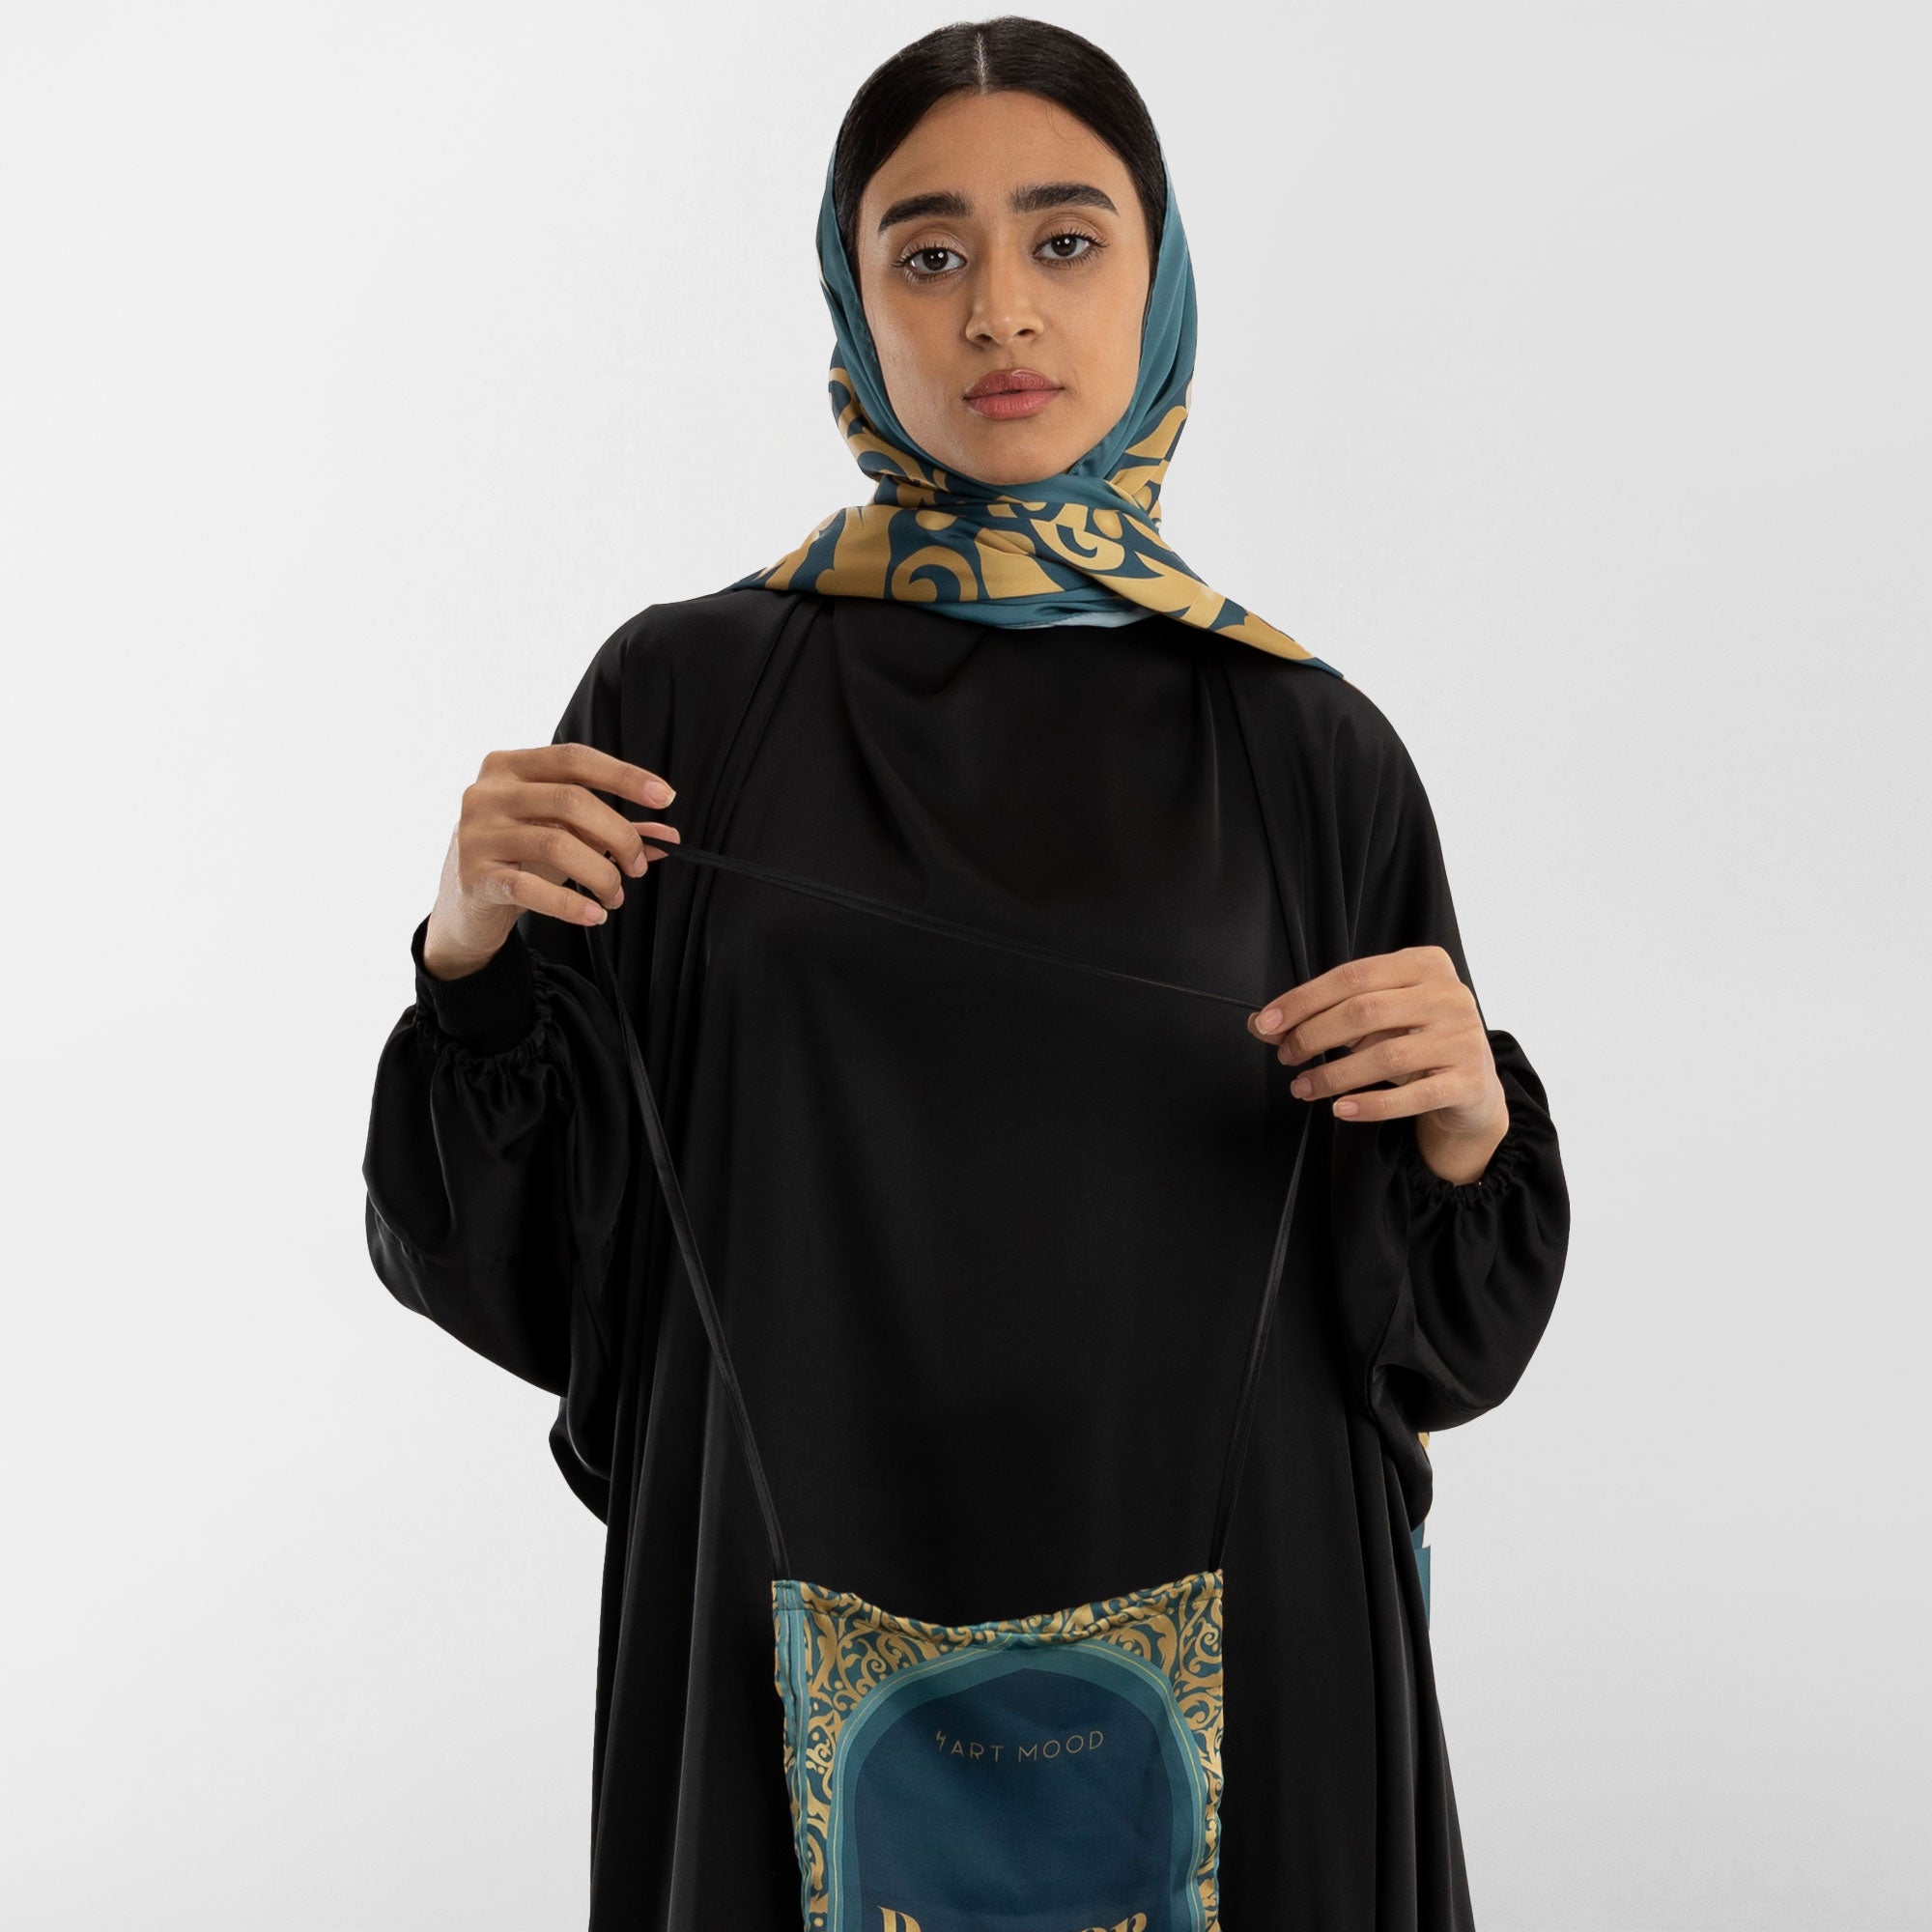 Prayer Wear - Isdal AL-HEDAYA TEAL & GOLD